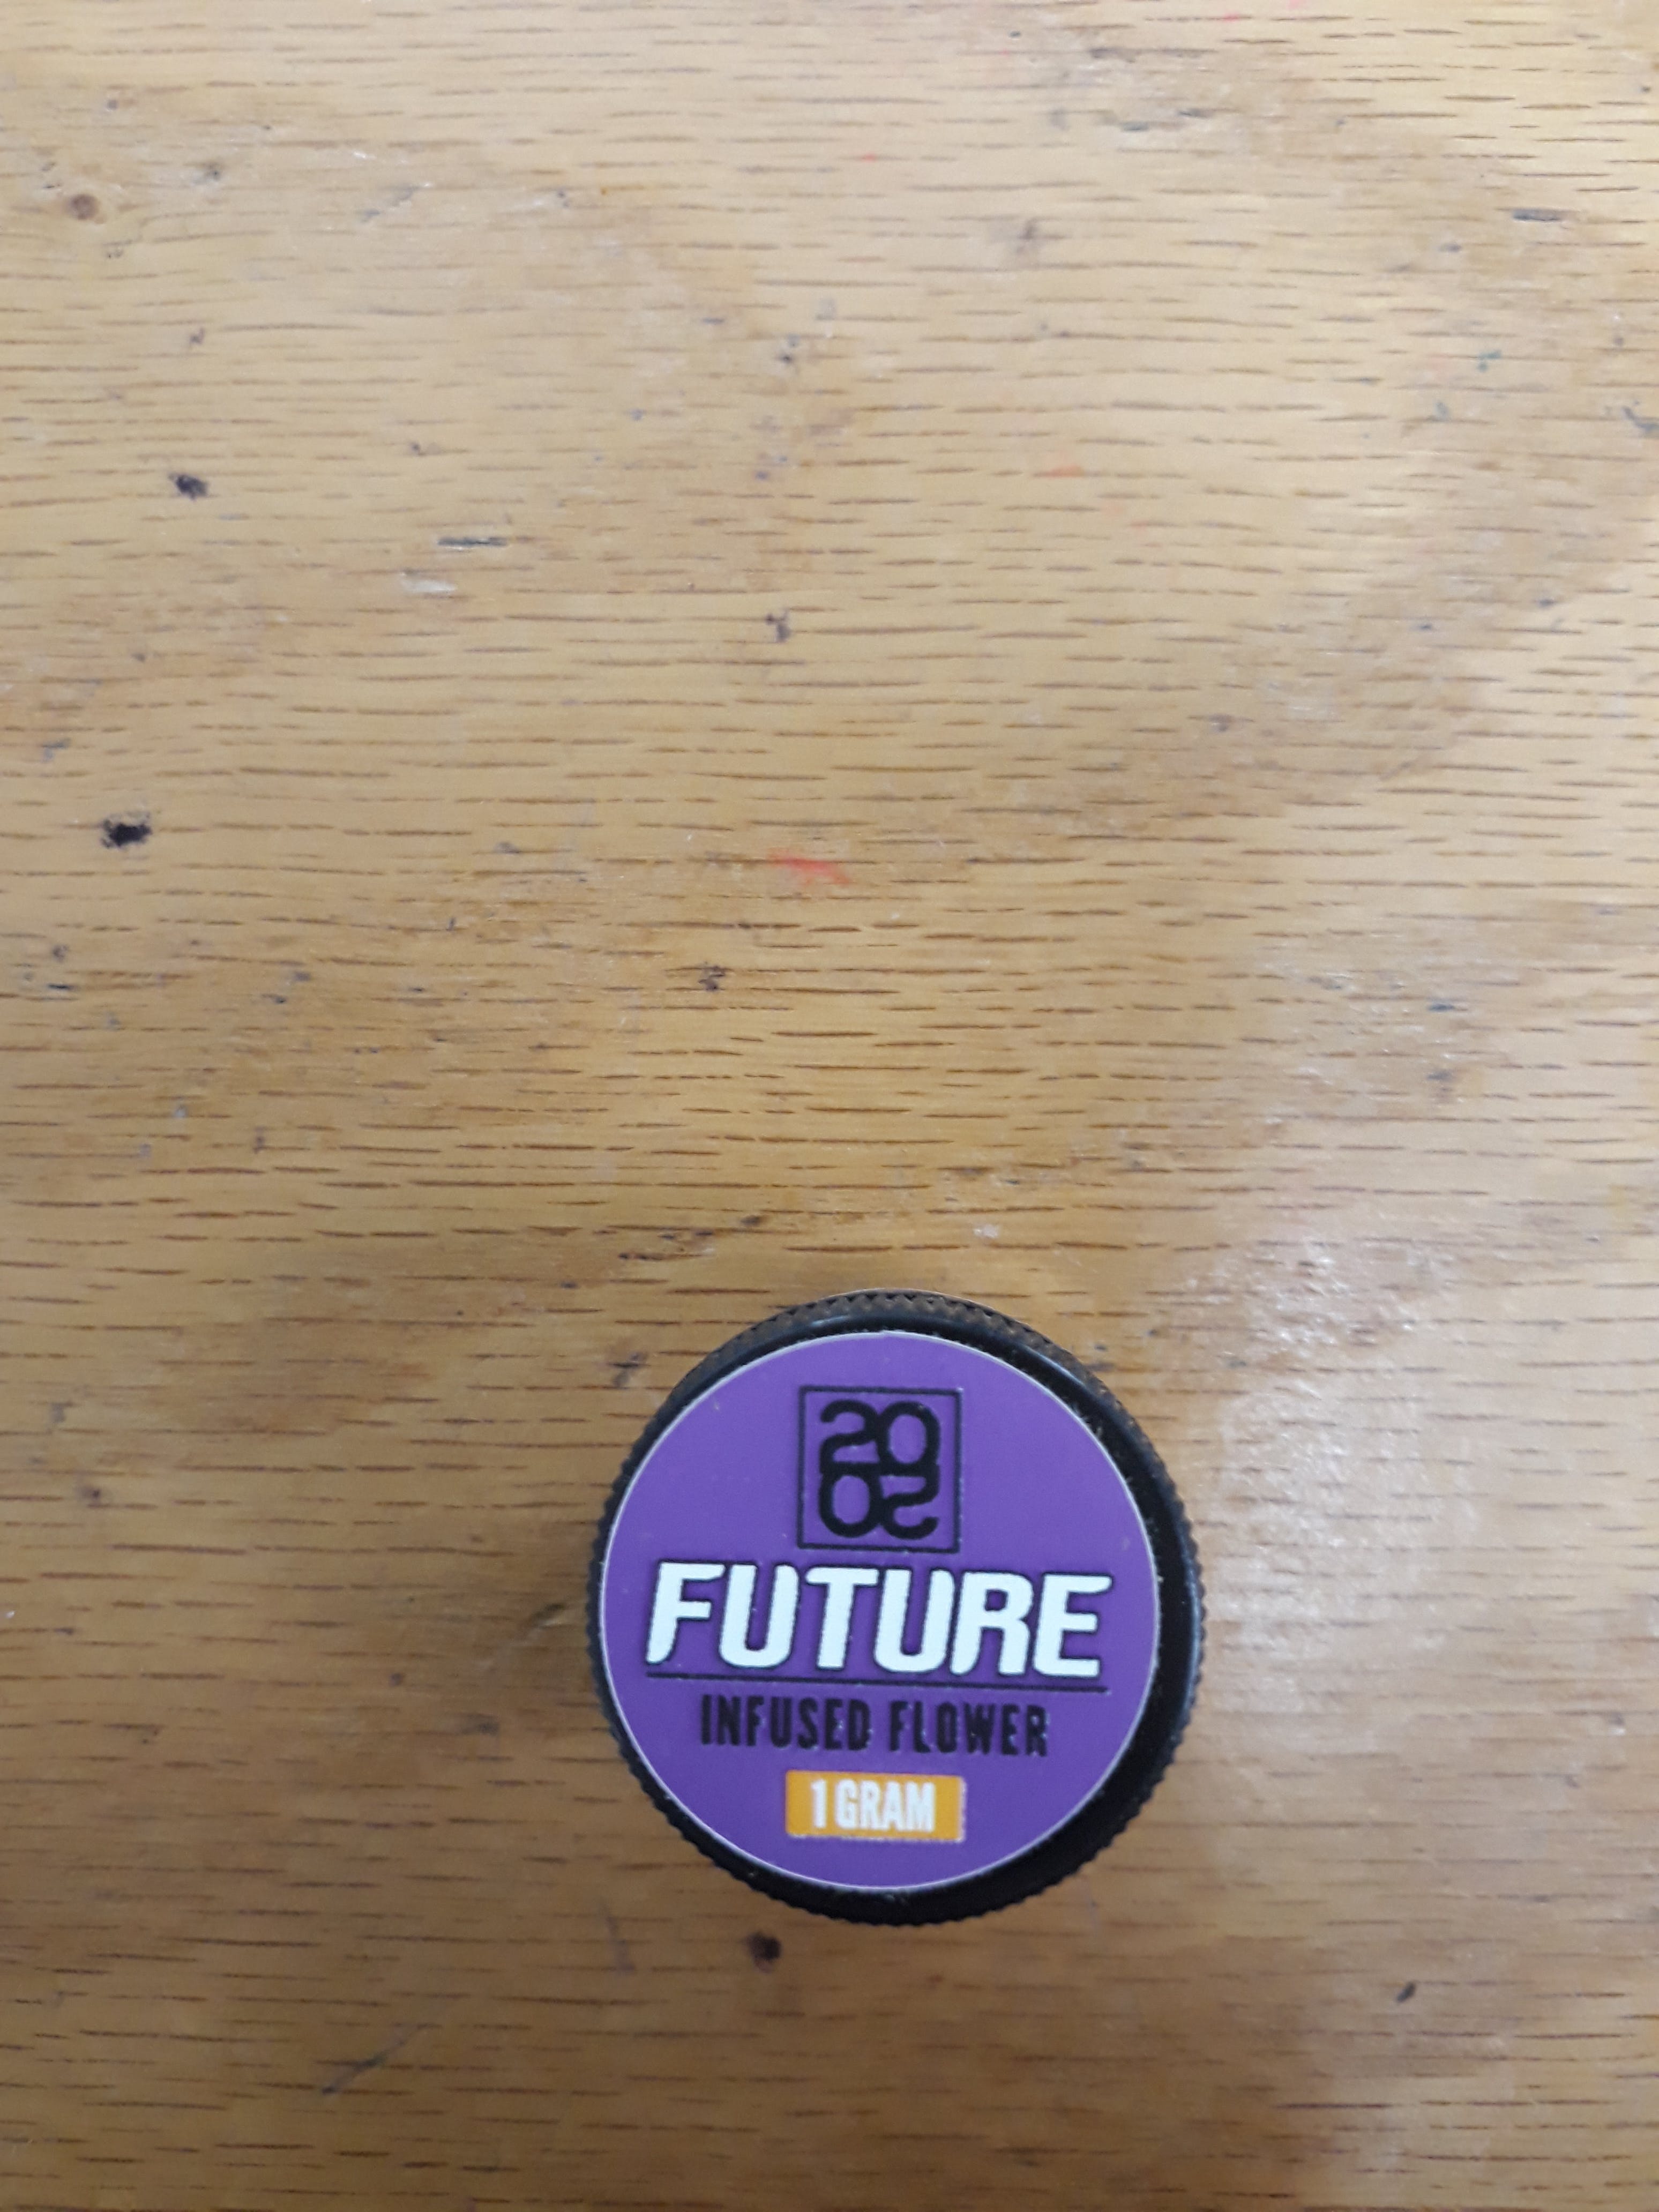 wax-2020-future-infused-flower-grape